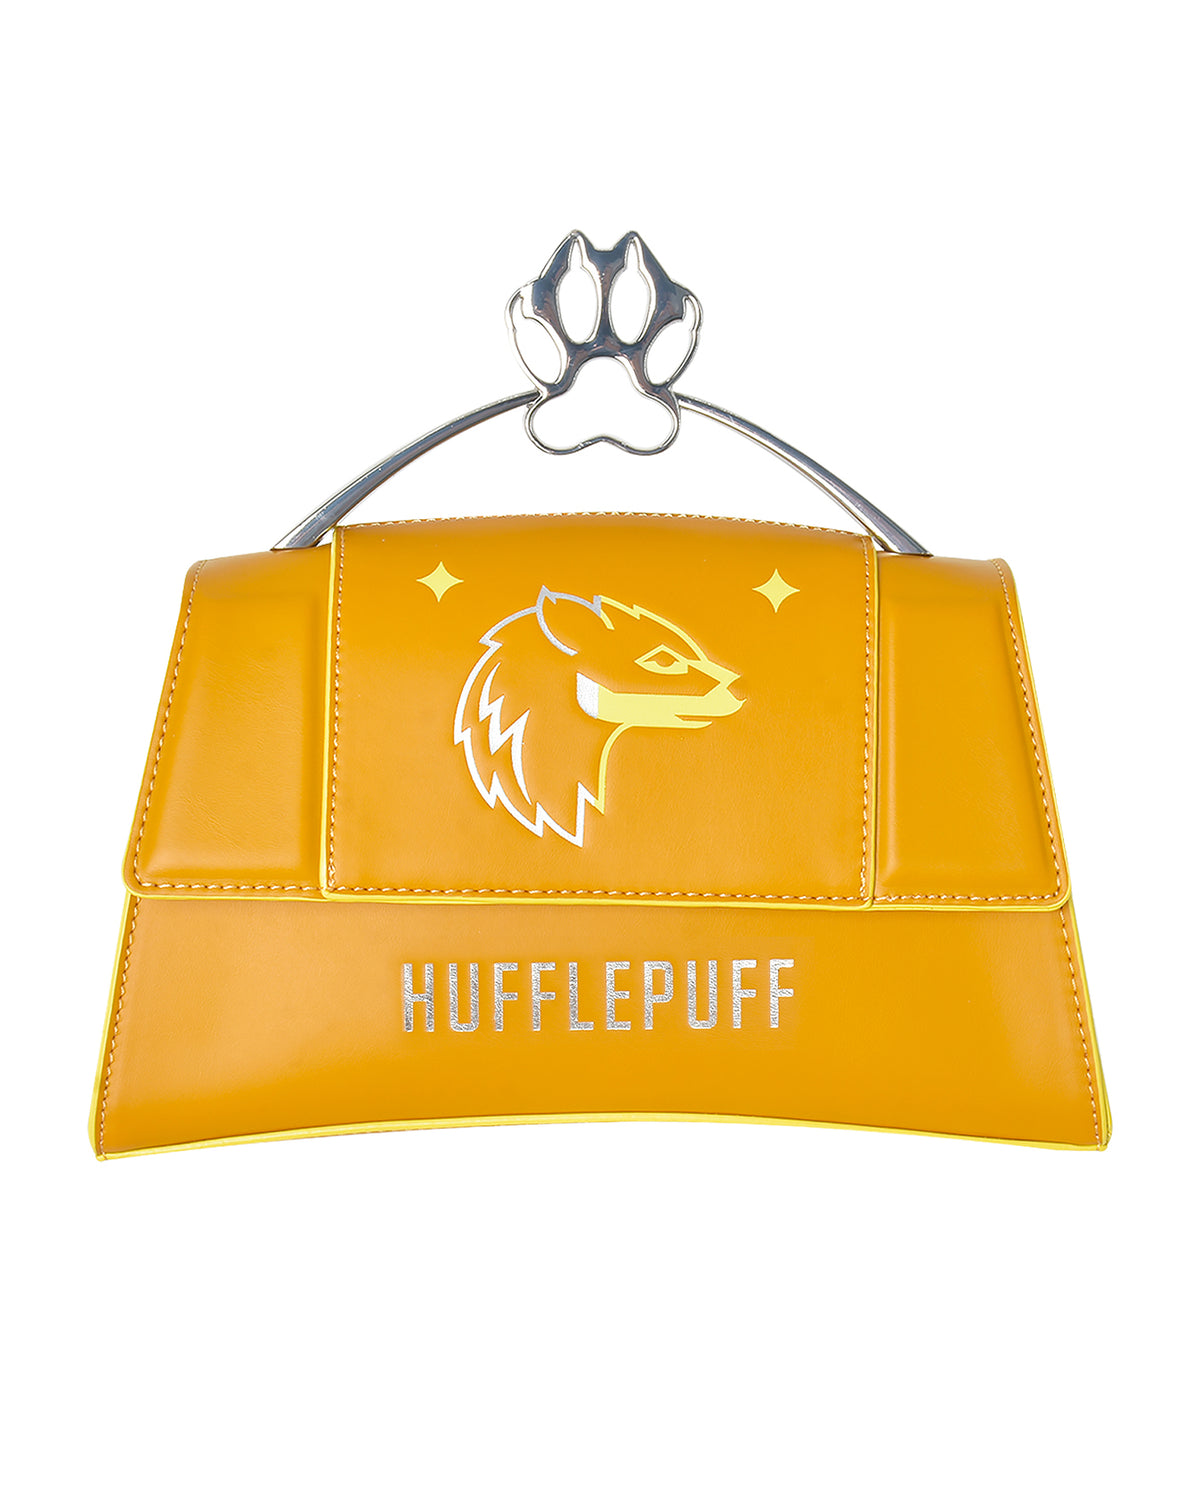 Hufflepuff House Mascot Satchel